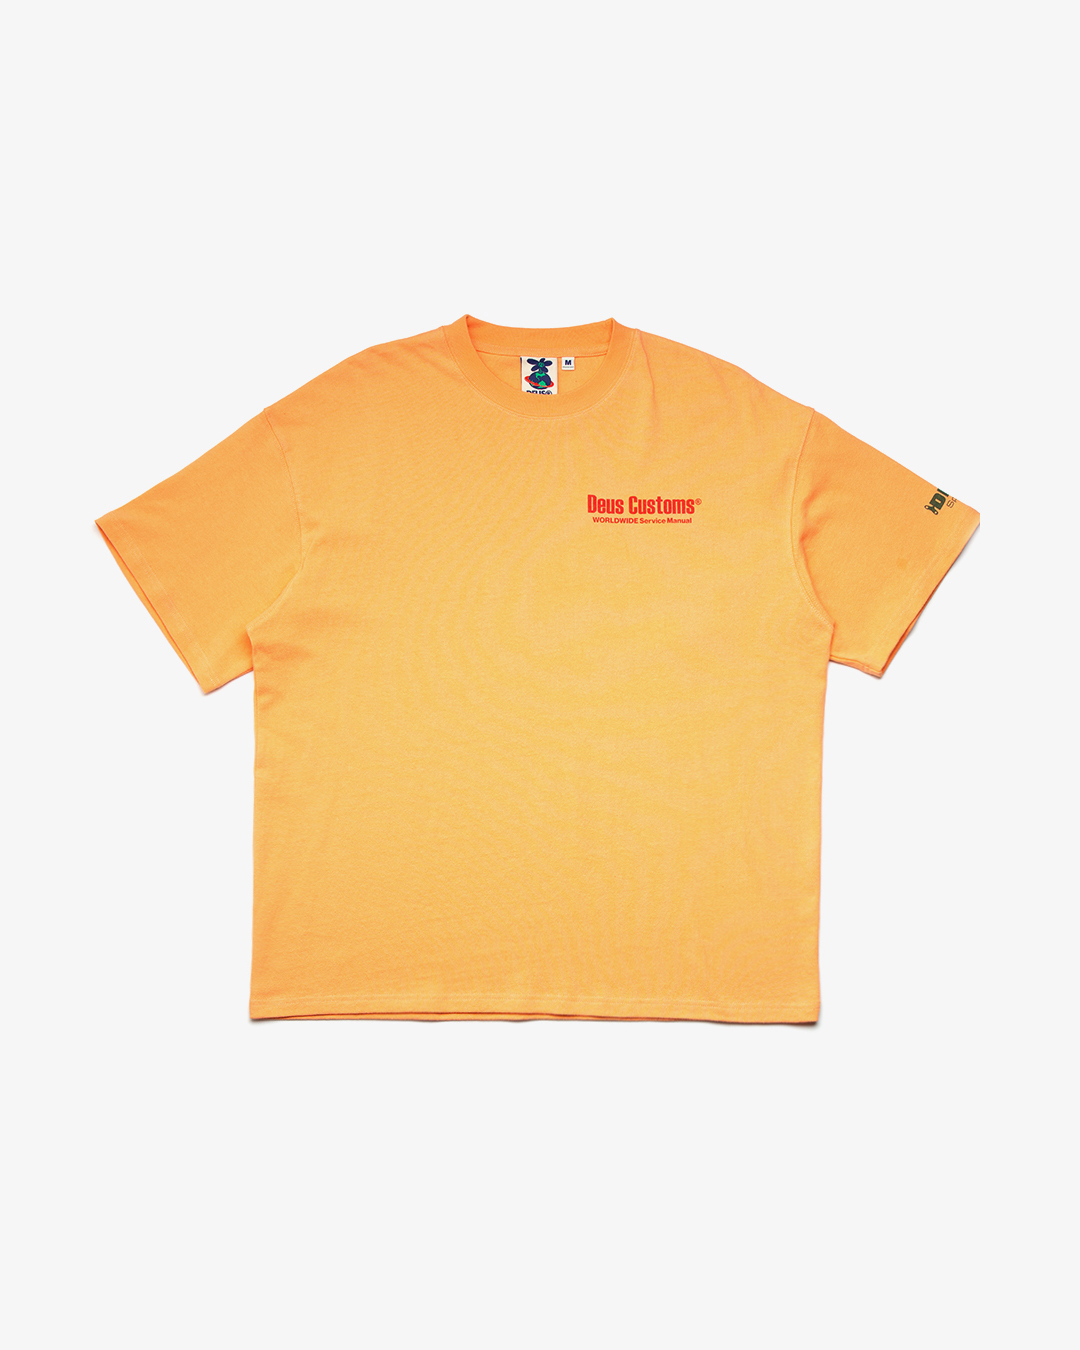 Deus ex machina tshirt - Service manual tee - orange